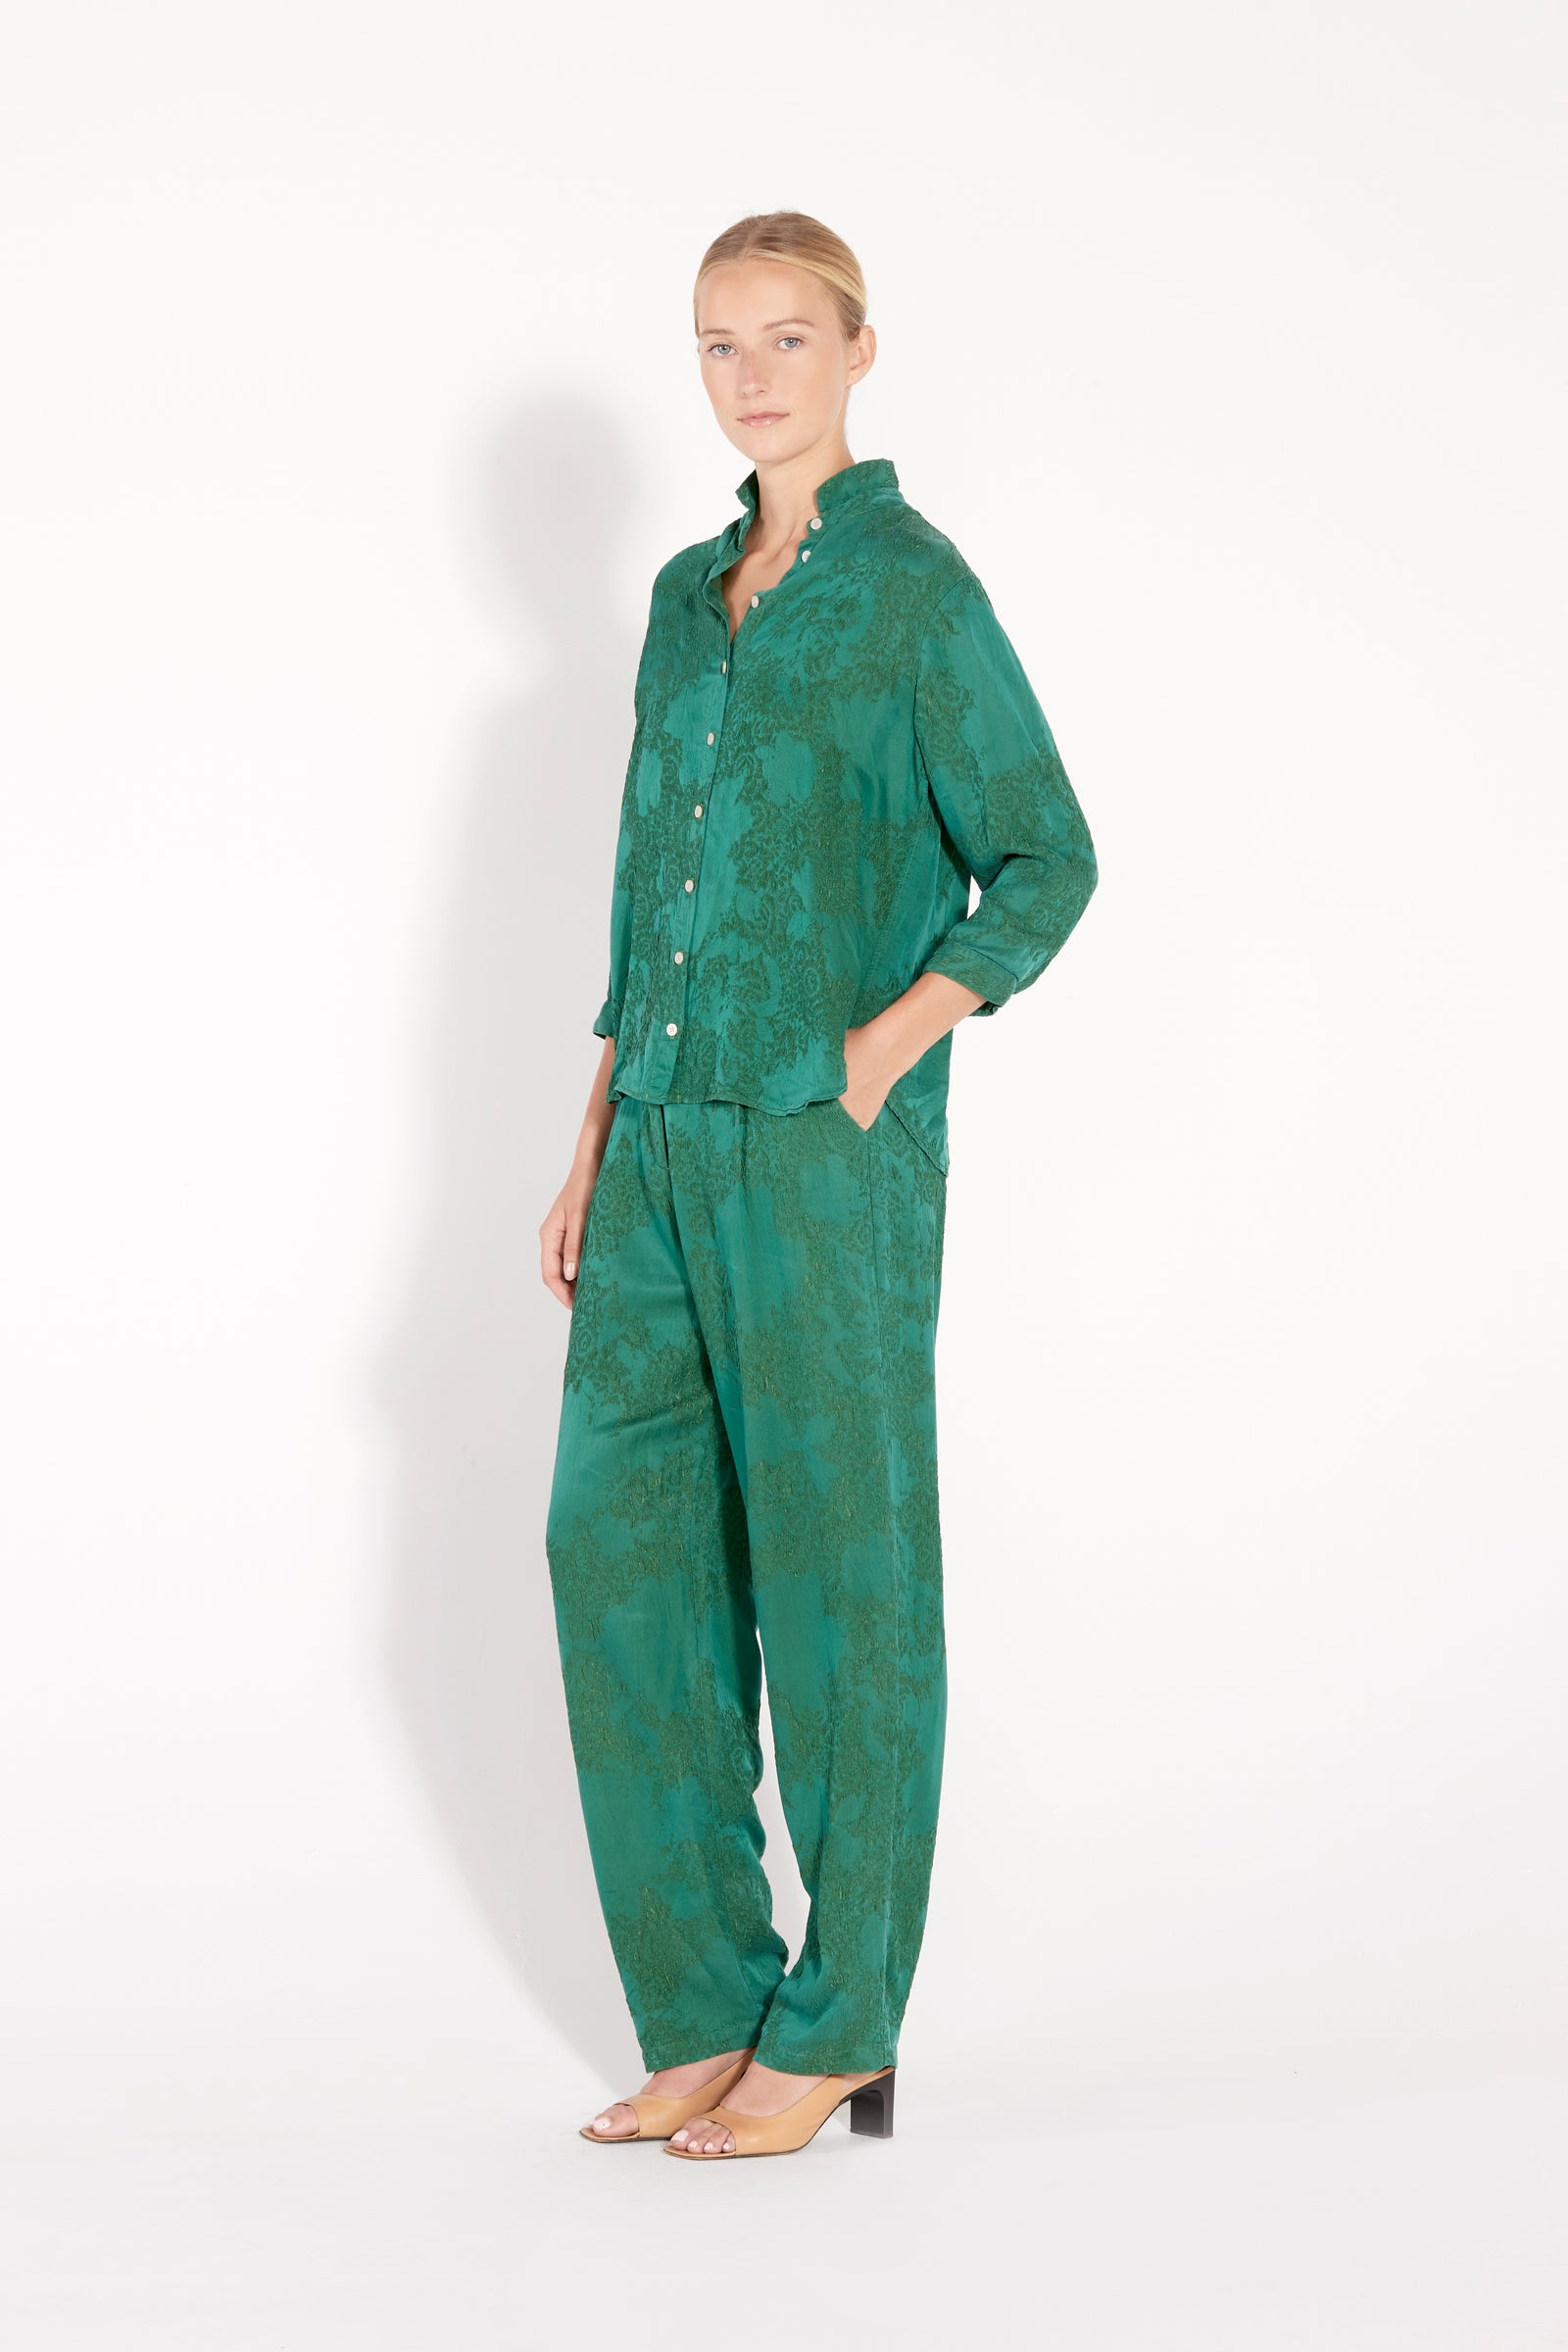 Emerald Silk Jacquard Lauren Blouse Full Side View